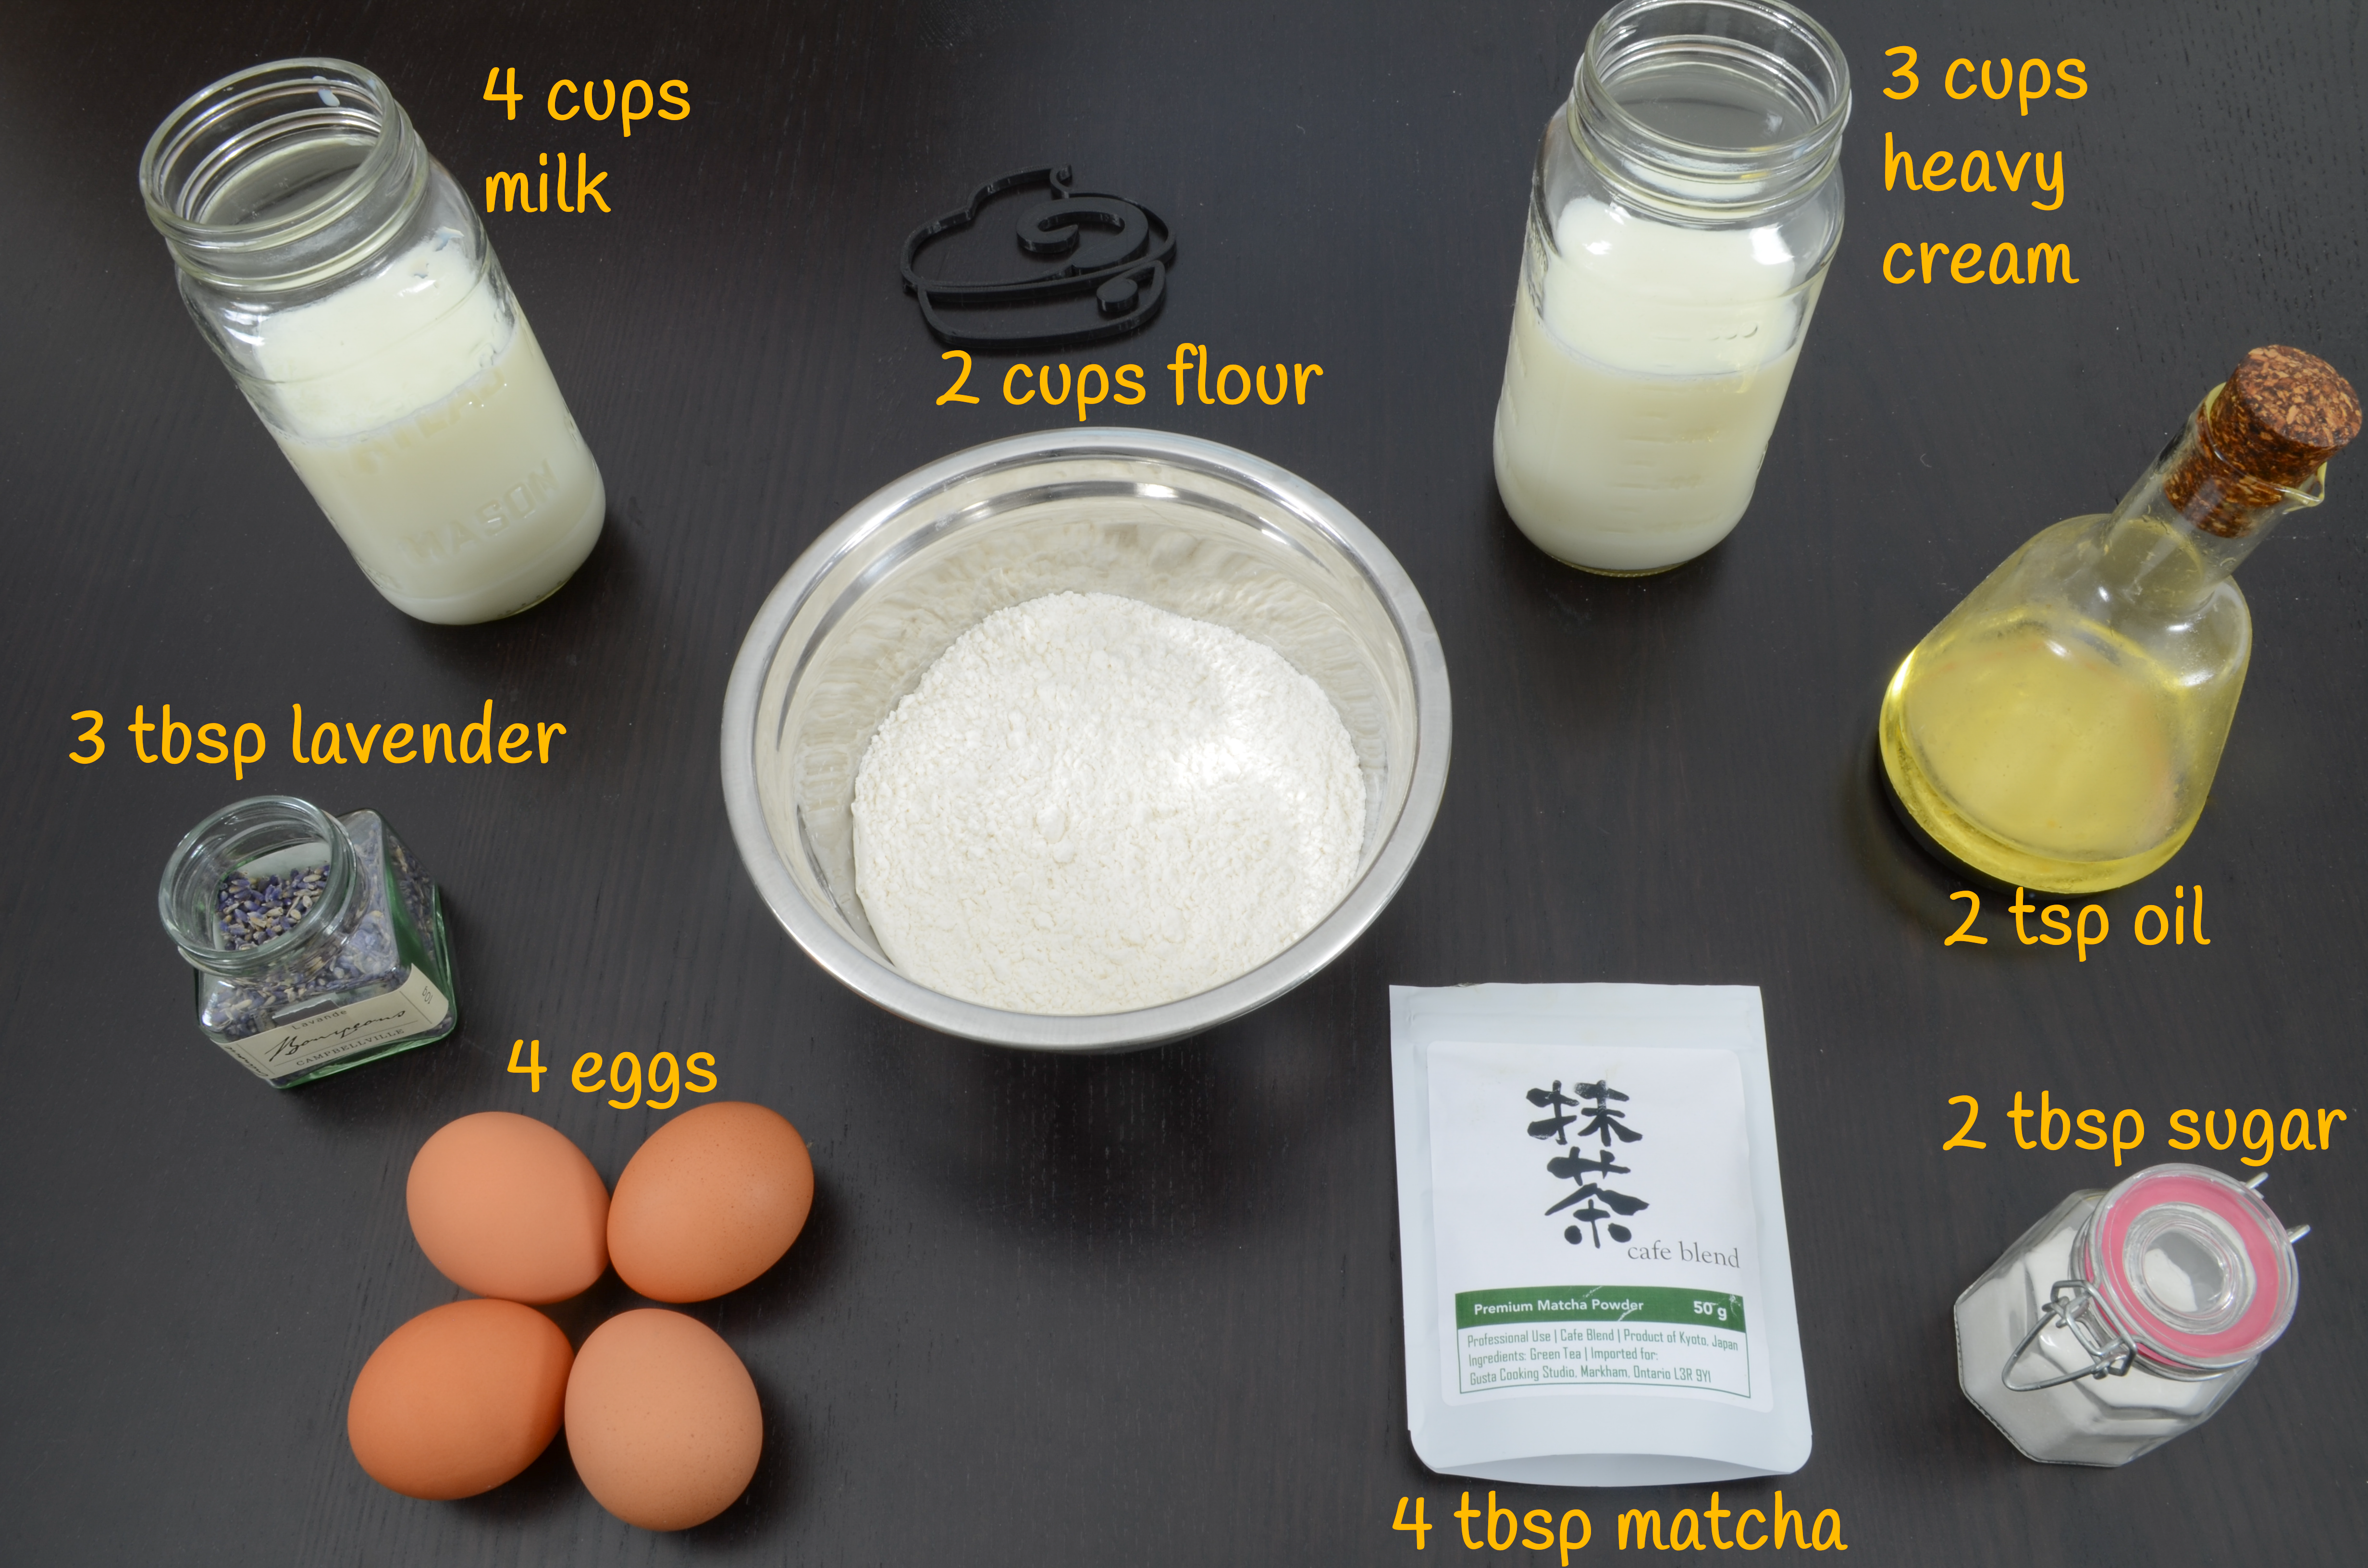 Ingredients for Matcha Lavender Cake